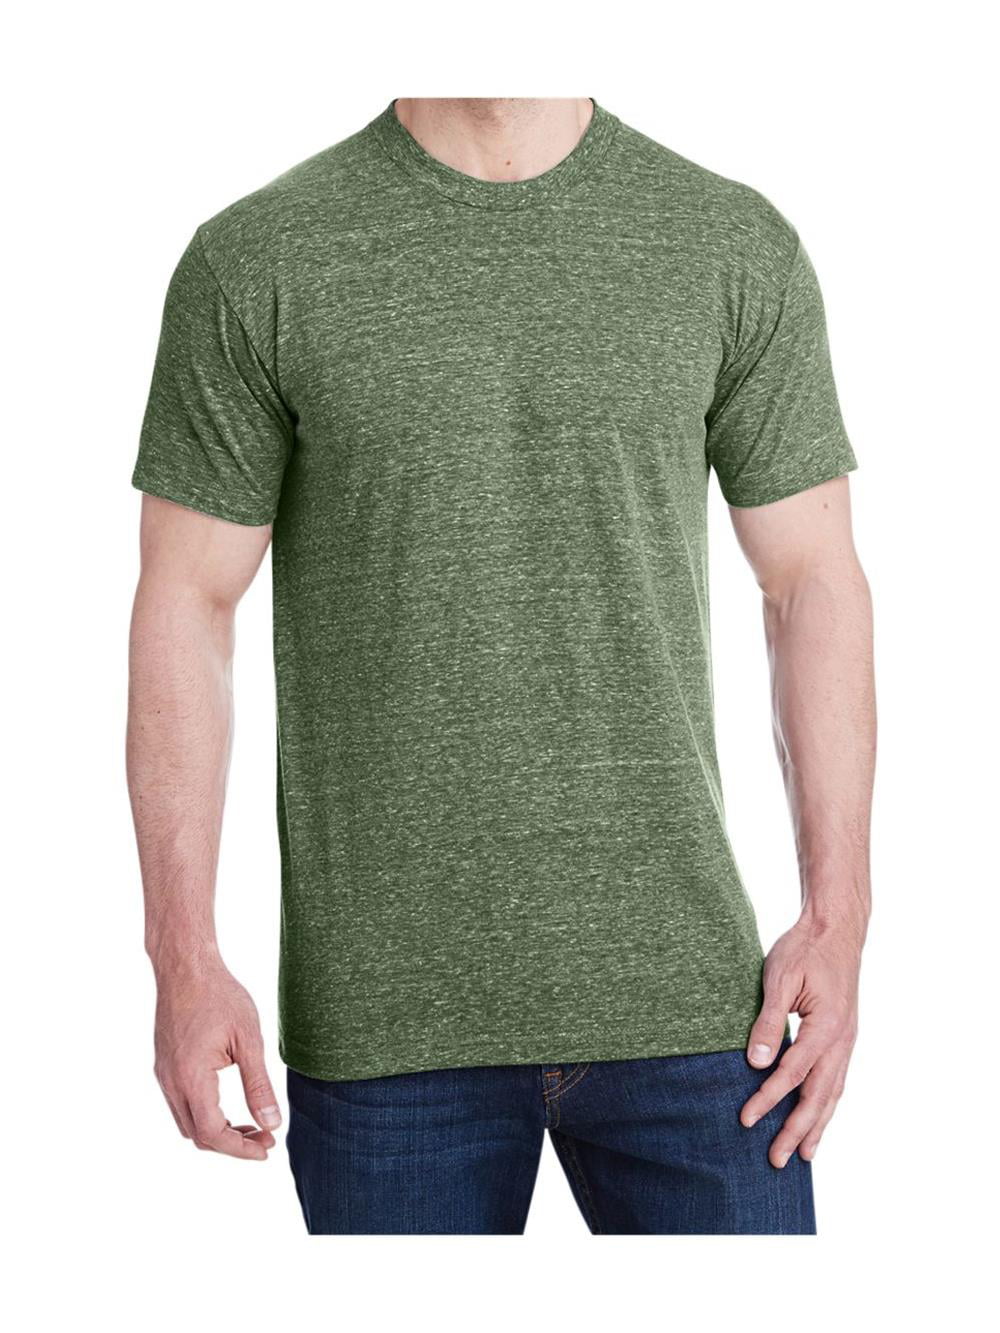 Bayside - Bayside T-Shirts USA Made Triblend Crew 5710 - Walmart.com ...